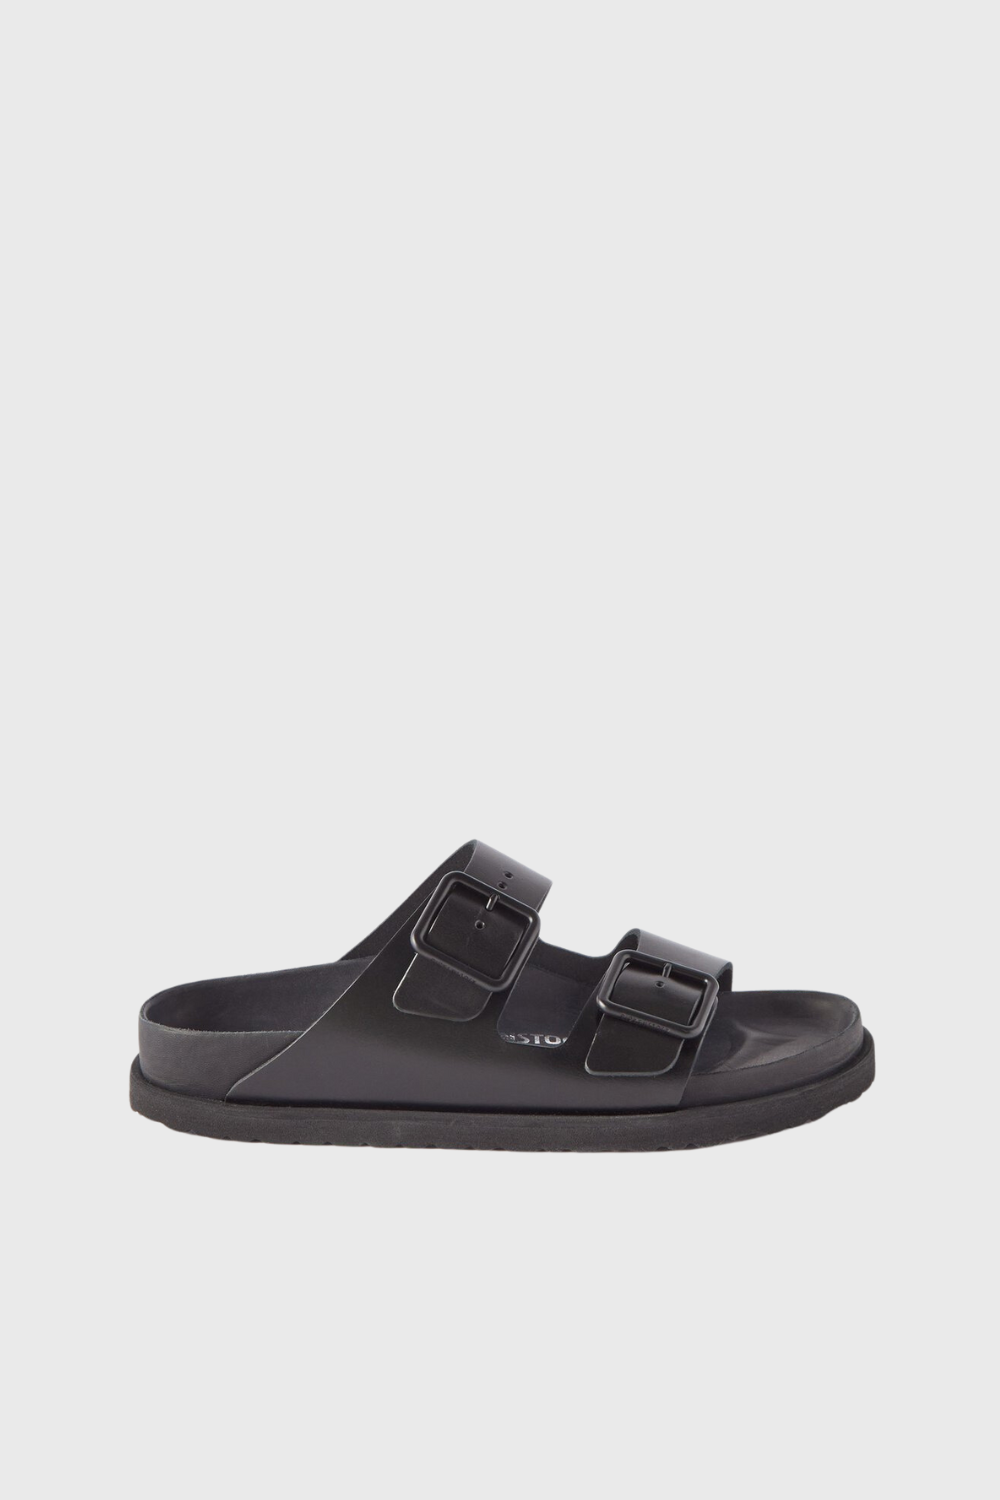 arizona leather sandals